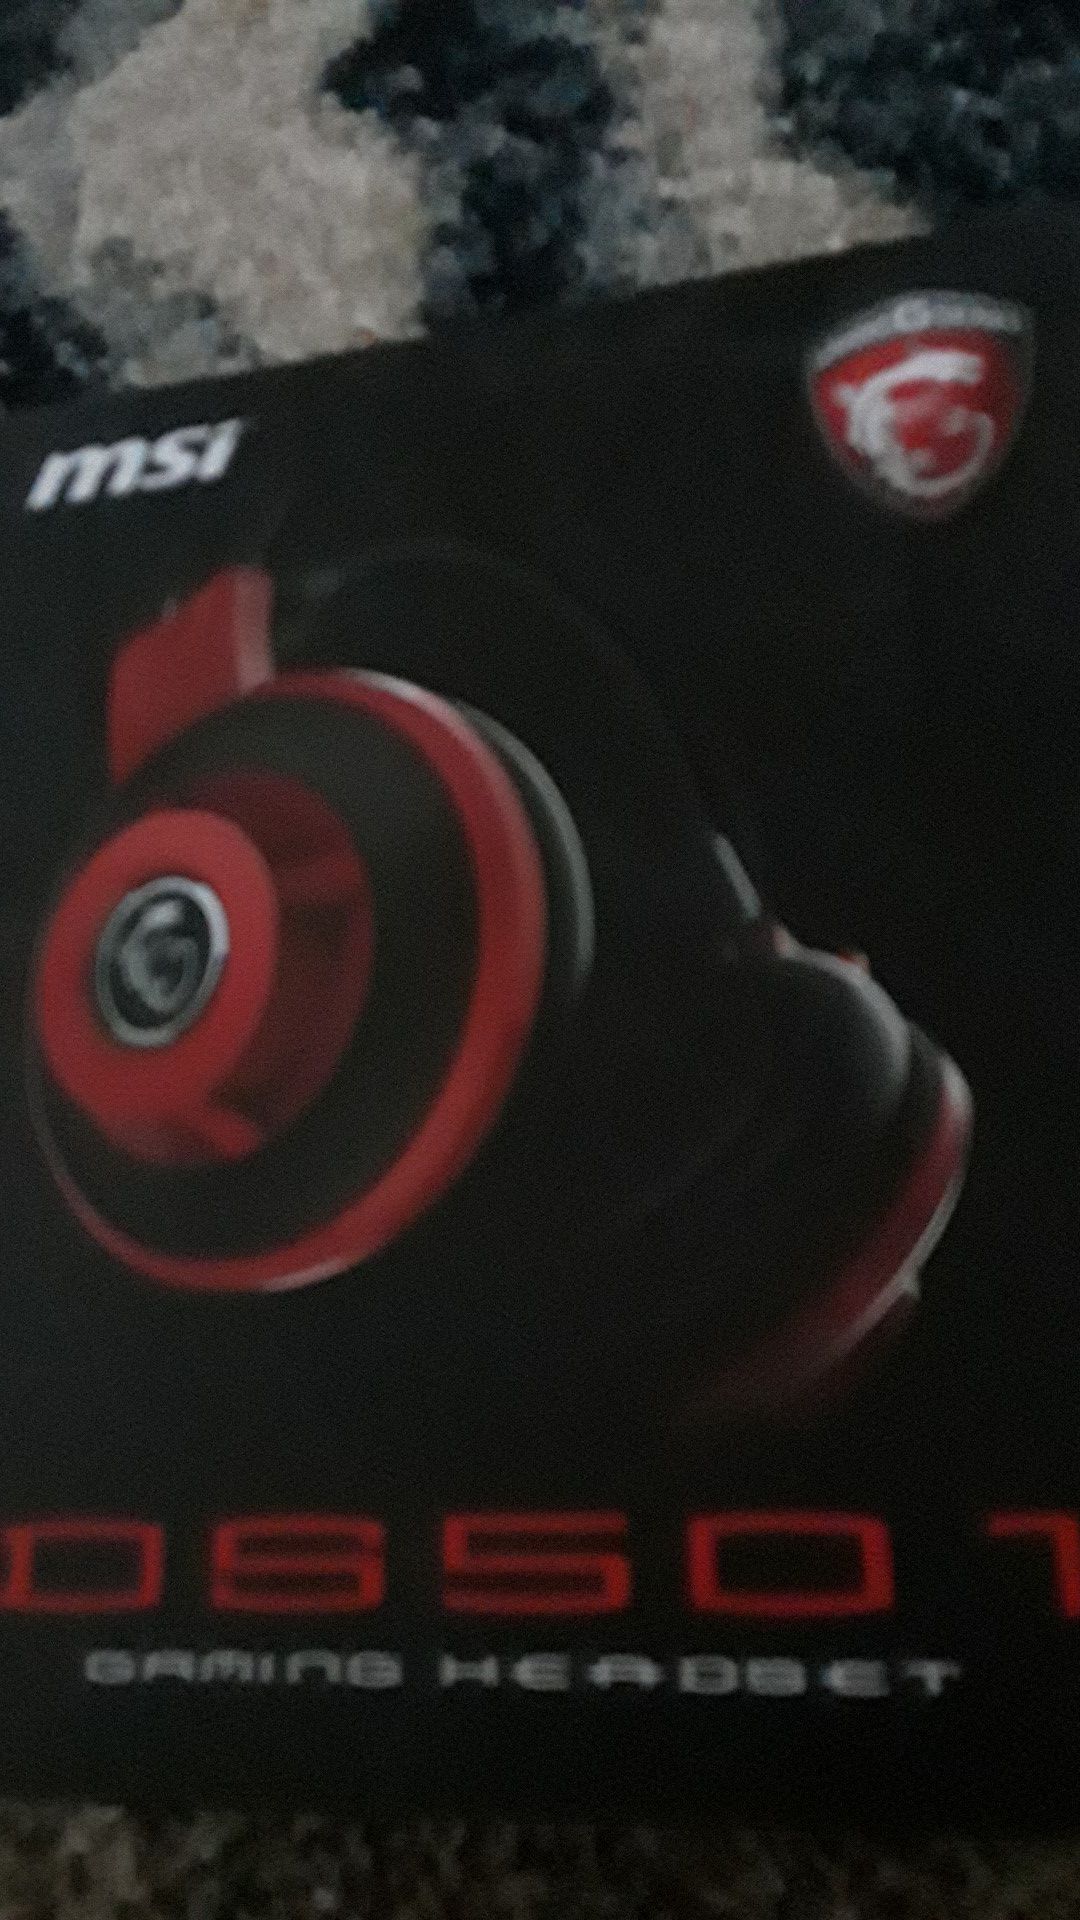 Msi gameing headphones